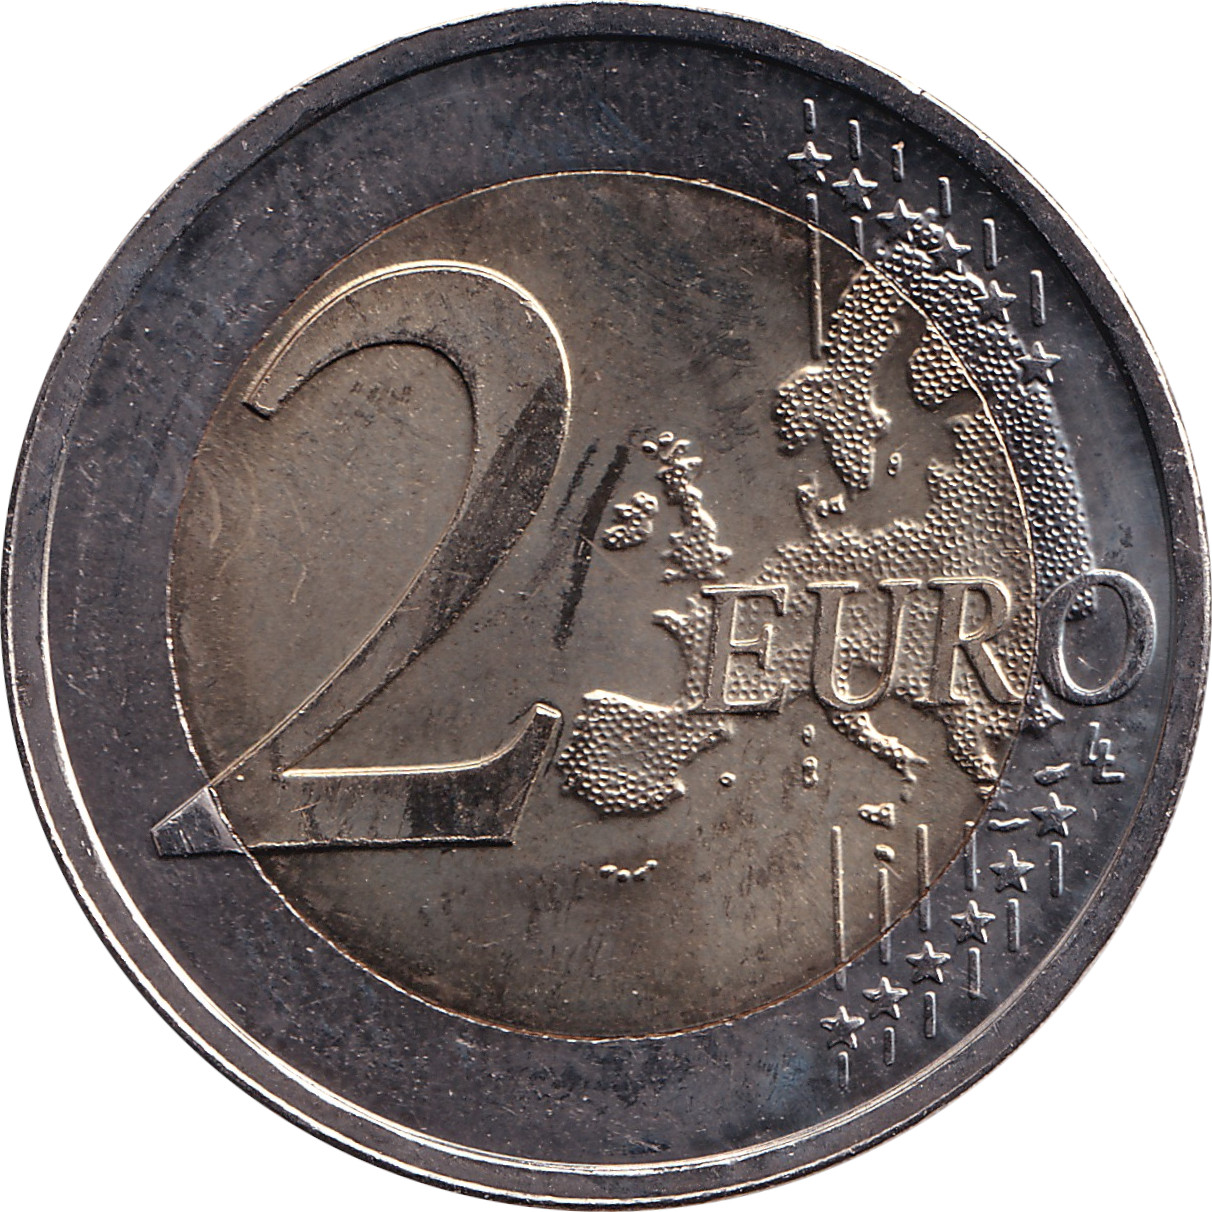 2 euro - Traité de Tartu - 100 years